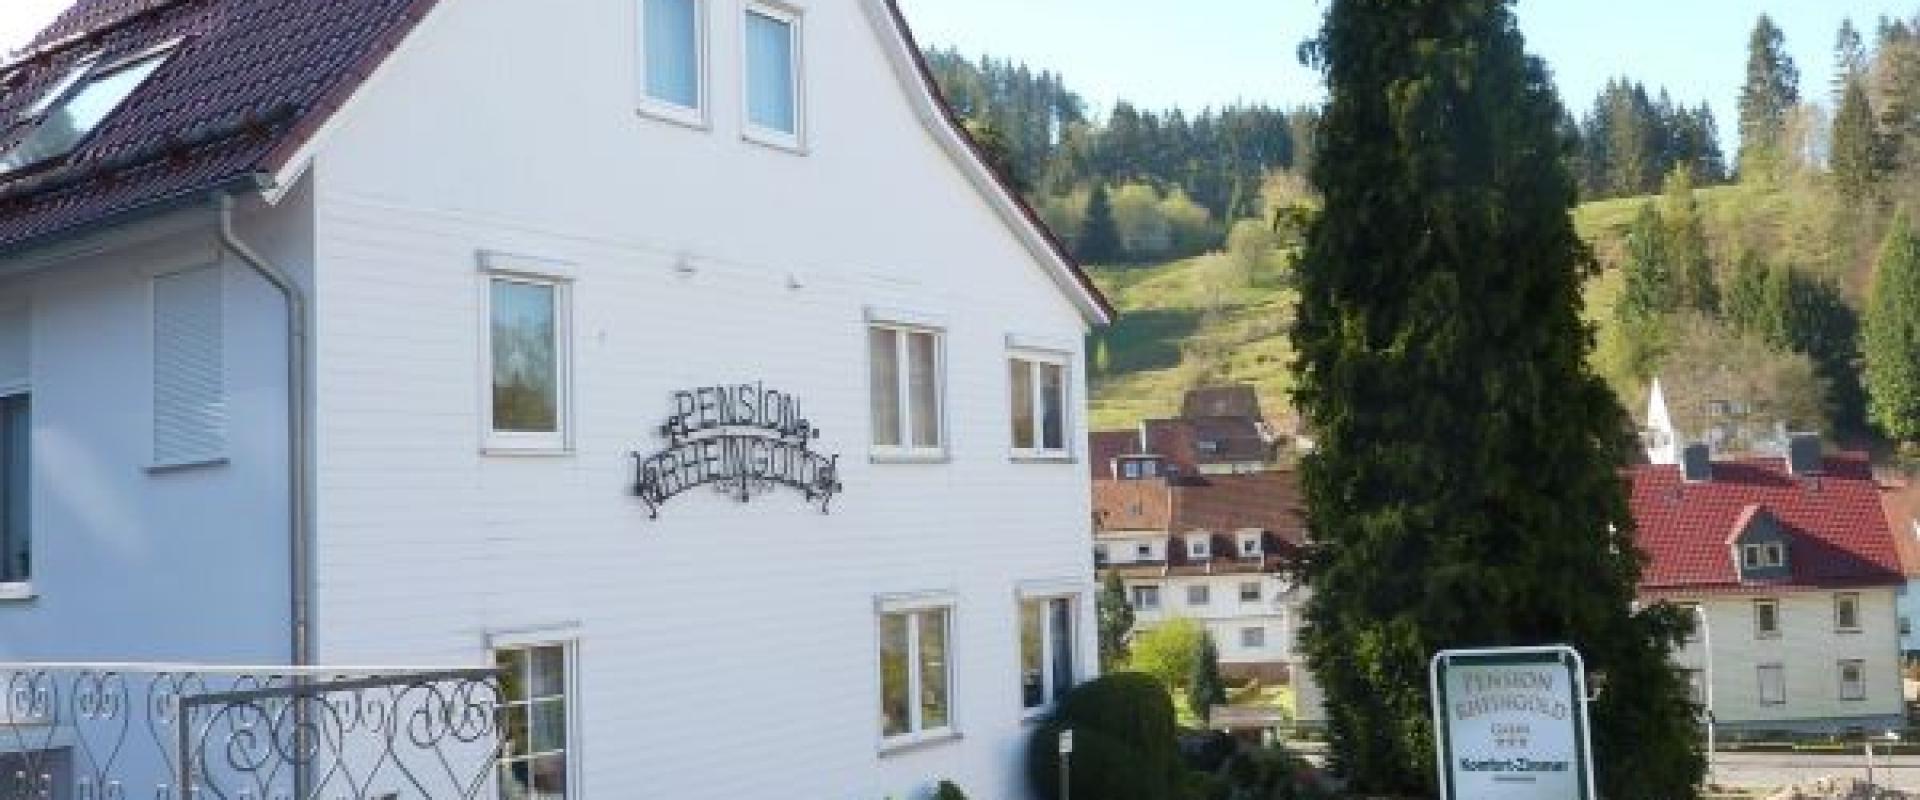 11174 Biker Hotel Rheingold Garni im Harz.JPG